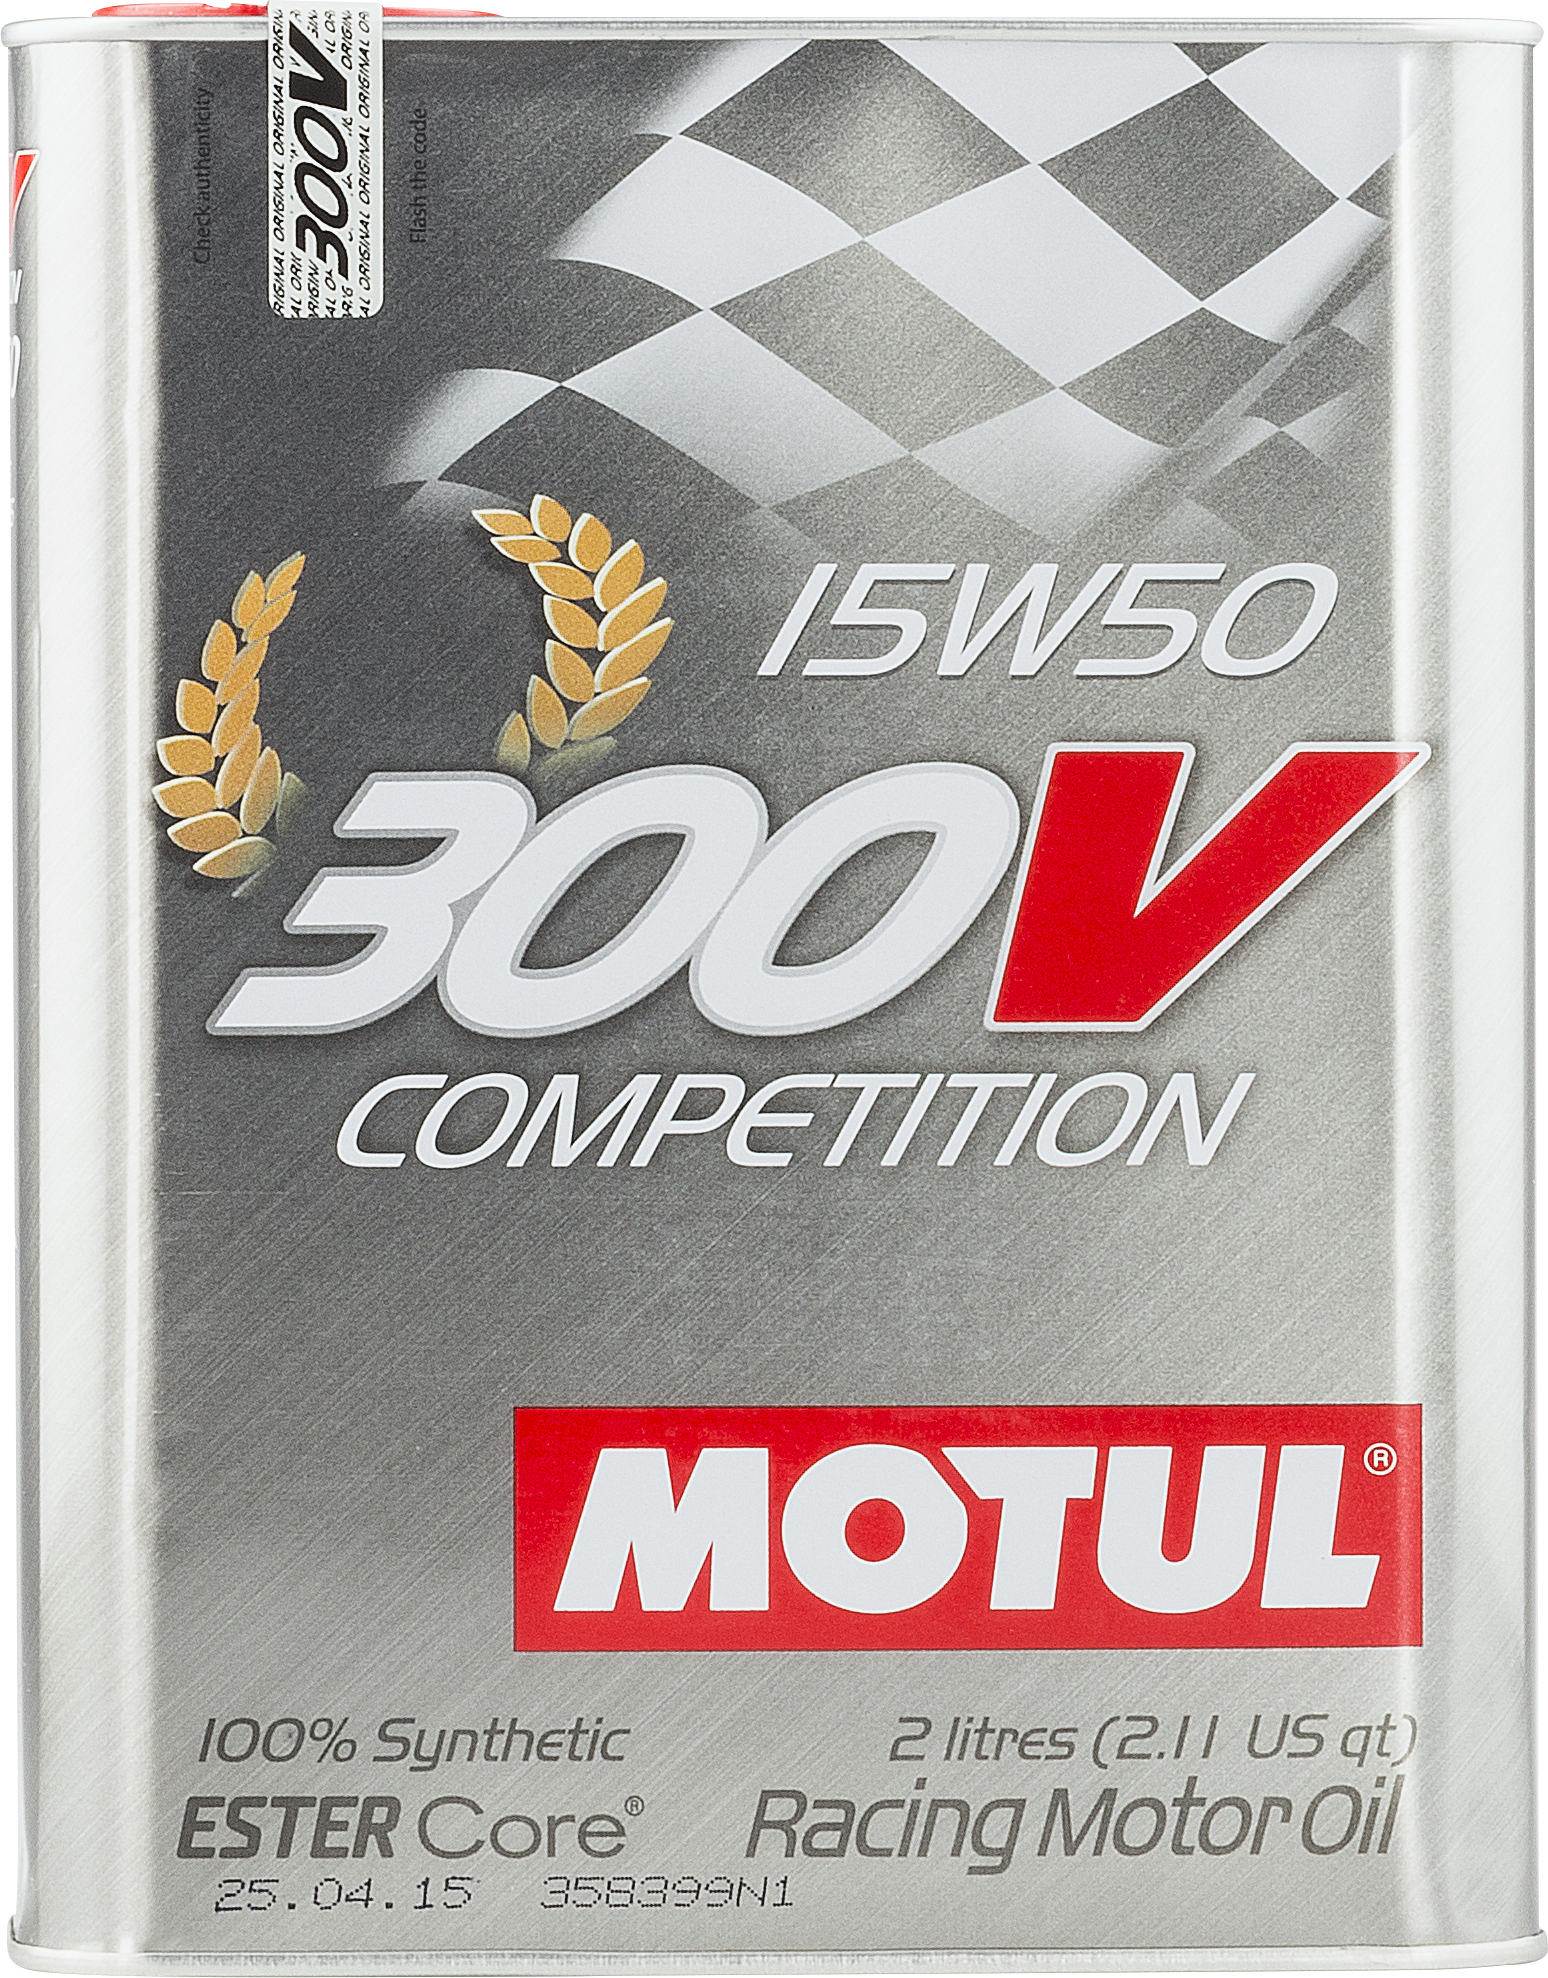 300V Competition